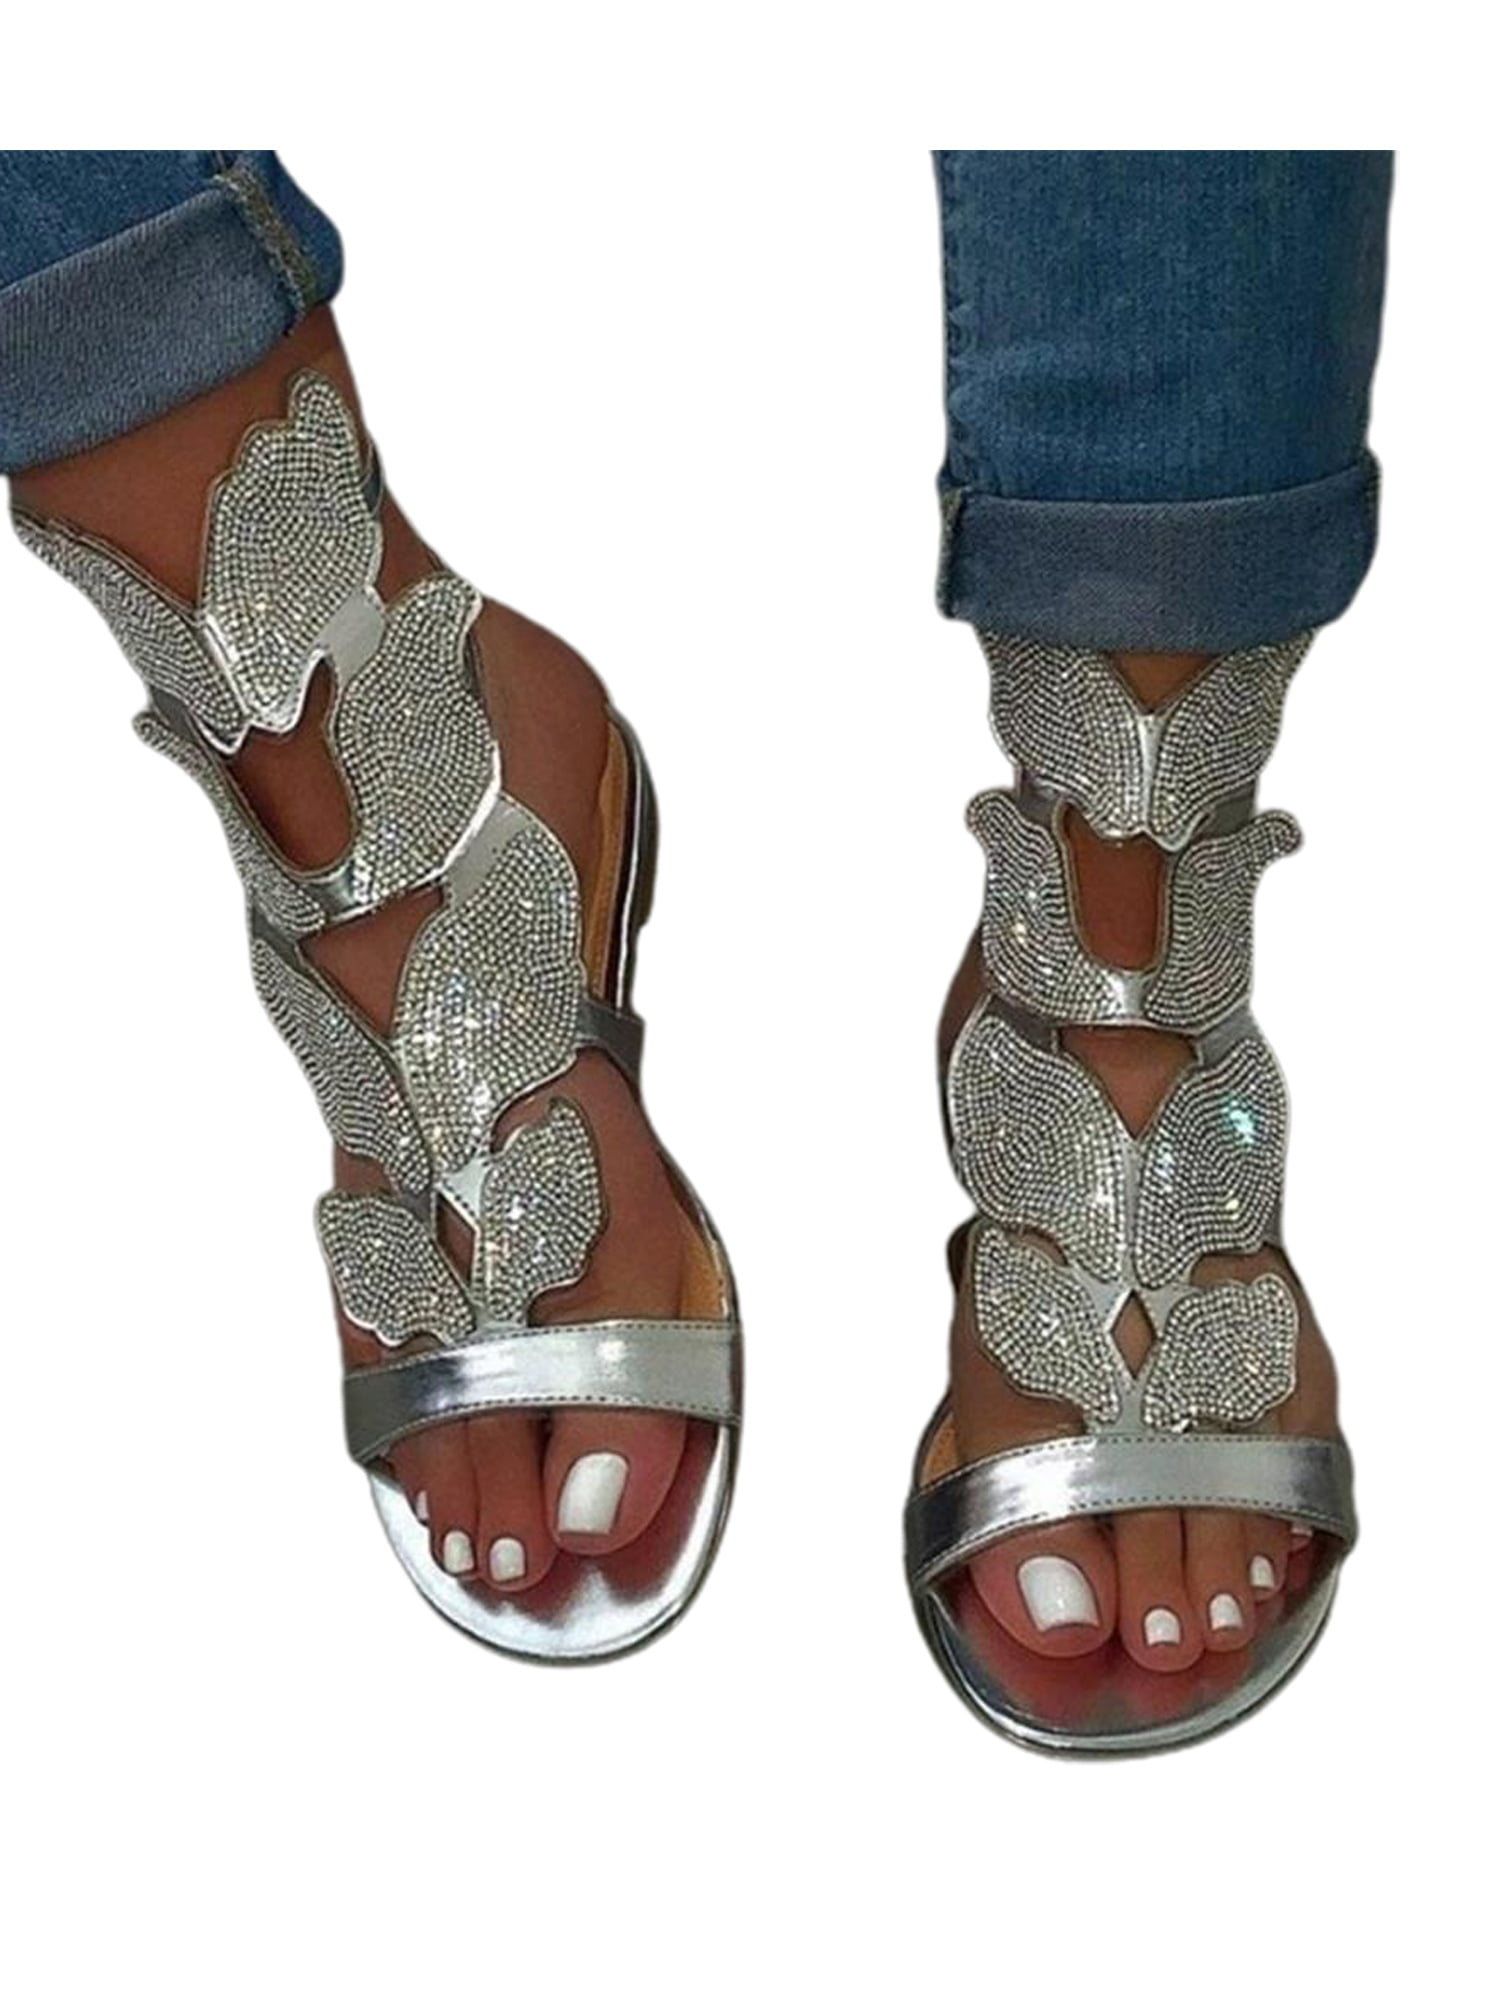 Lazamani Toe-Post sandals brown glittery Shoes Sandals Toe-Post sandals 